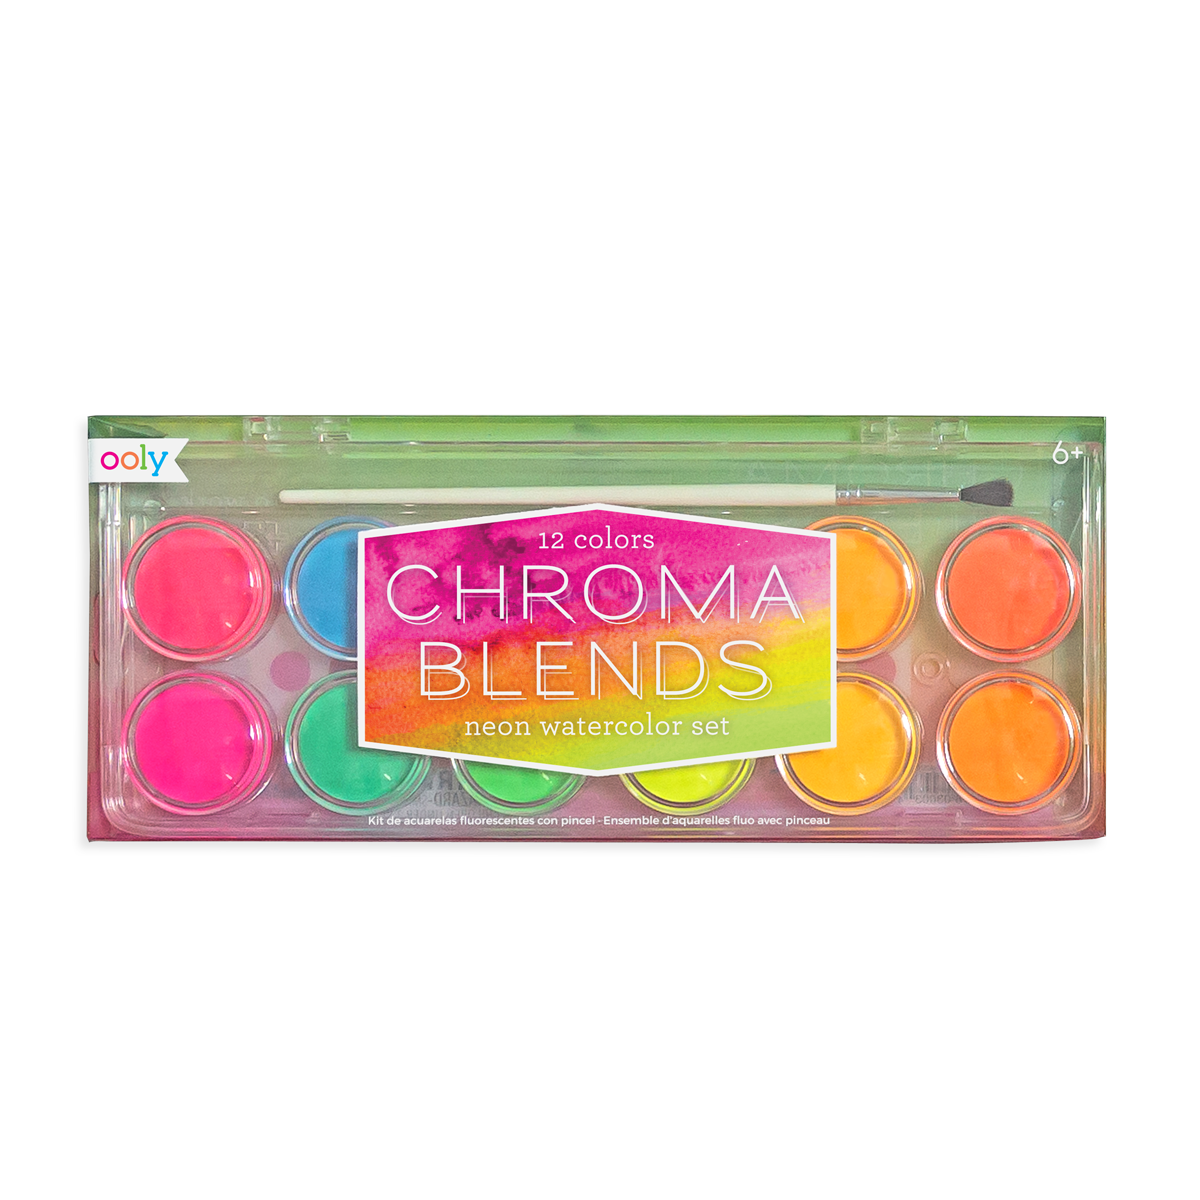 Chroma Blends Neon Watercolor Set 